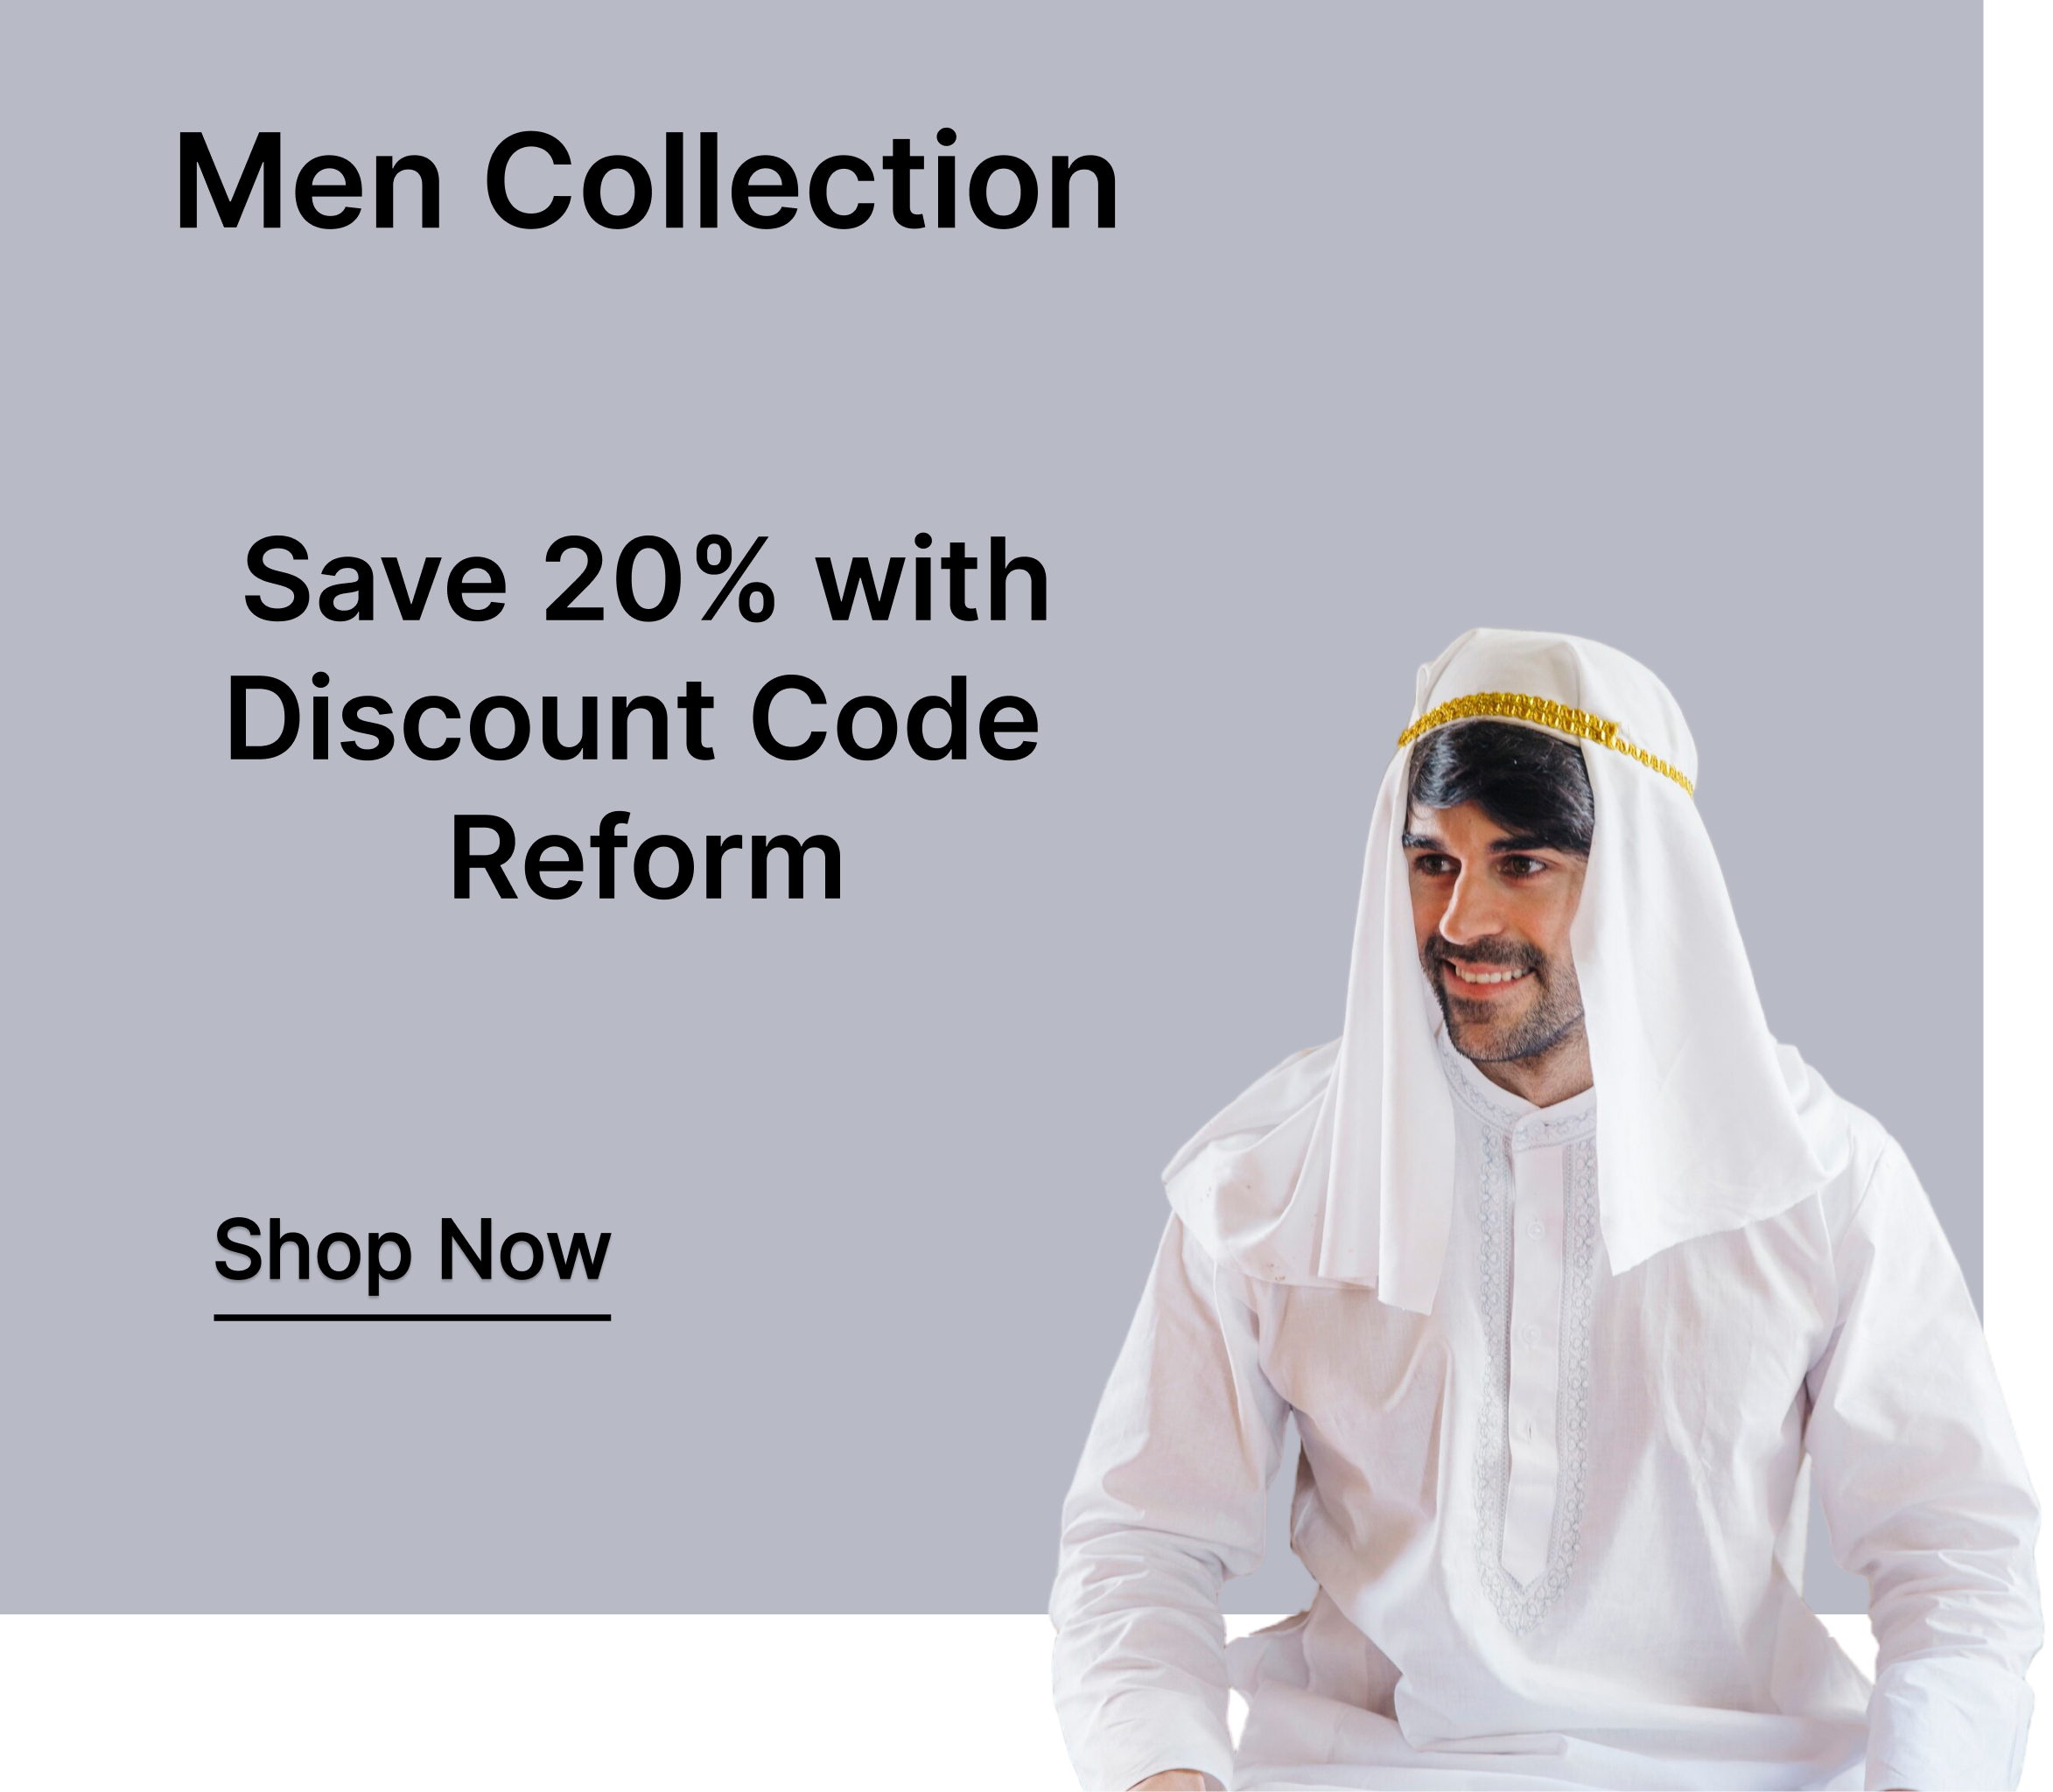 Men collection